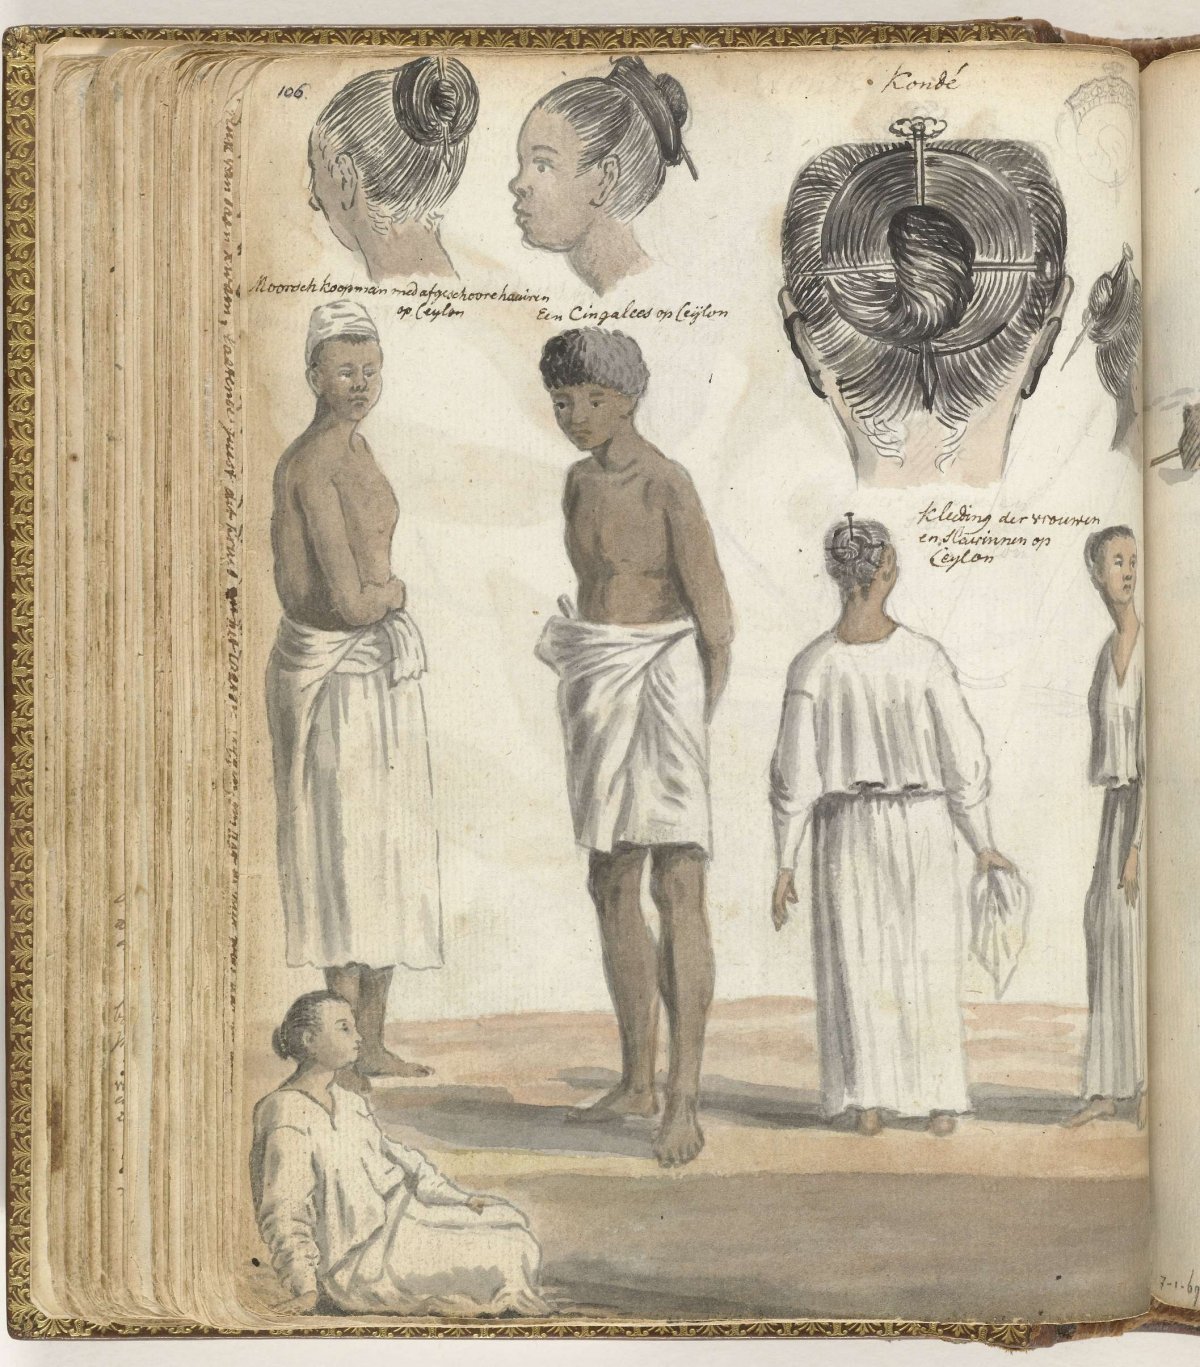 Hairdressing, folk types in Ceylon, Jan Brandes, 1785 - 1786